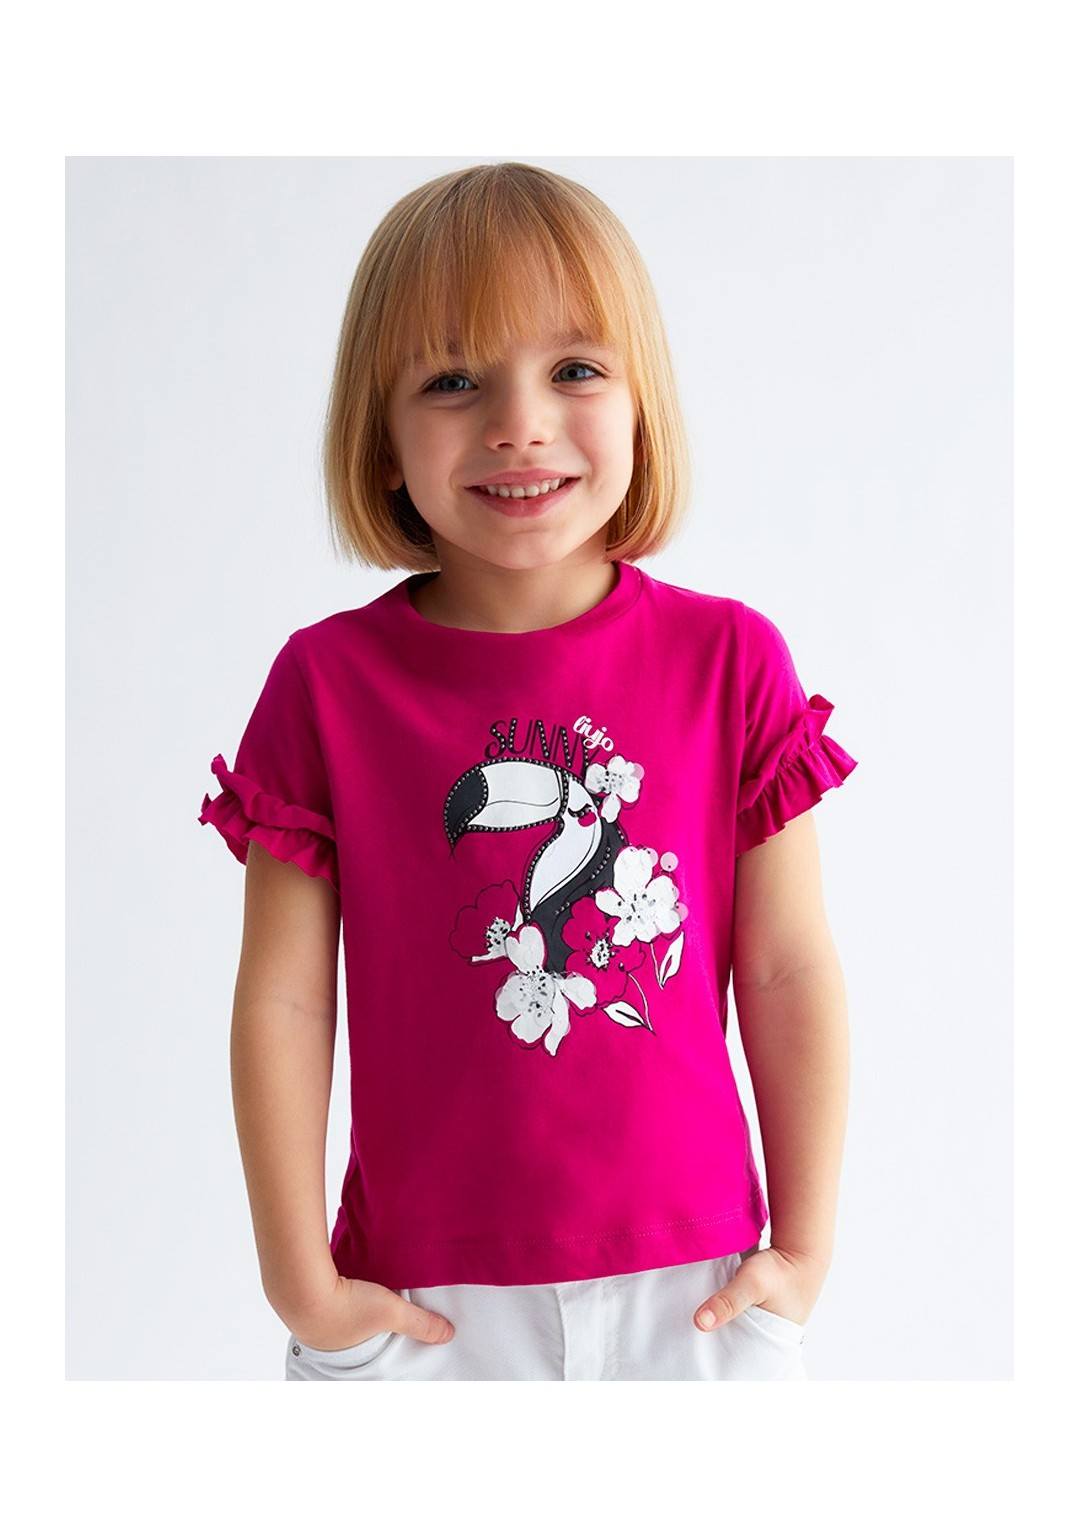 LIU JO - T-Shirt Pellicano - Bambine e ragazze - KA3144 J5923